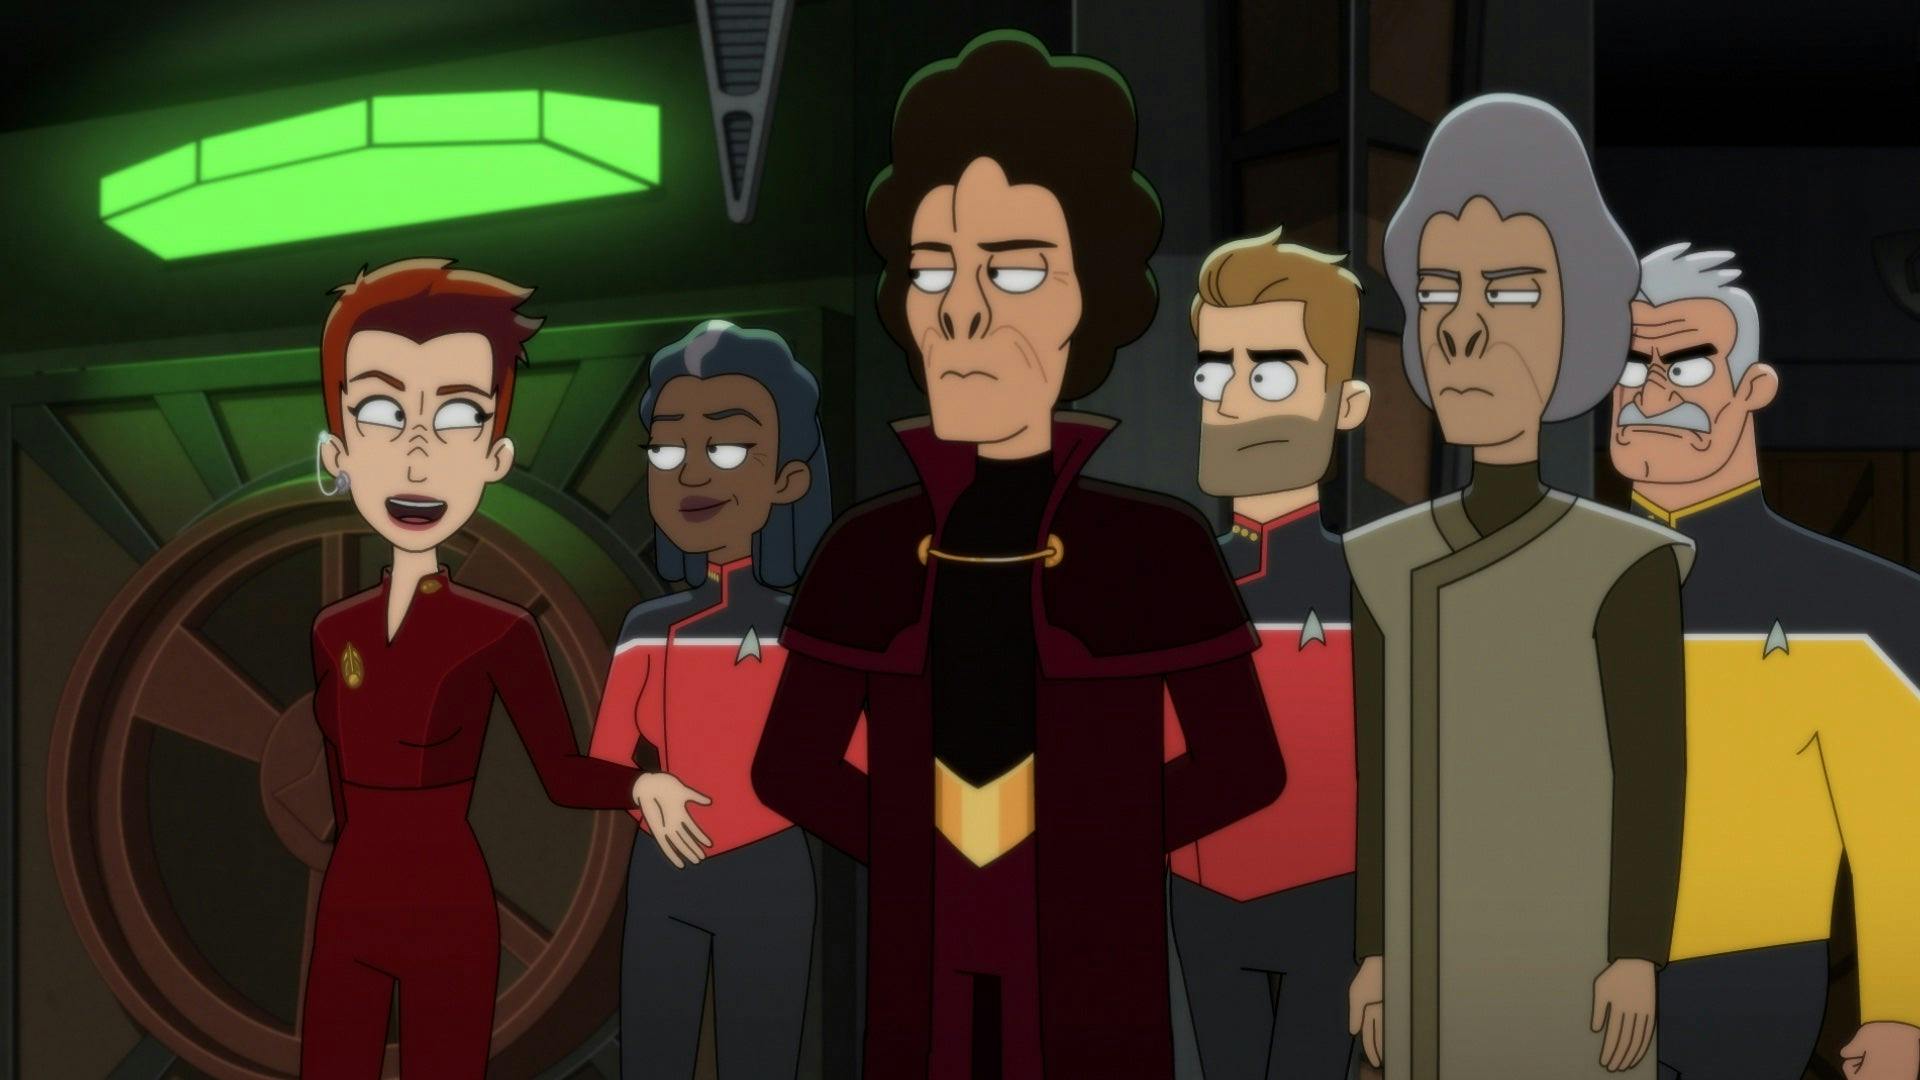 Kira leads Captain Freeman and her crew, as well as alien dignitaries, through the promenade.